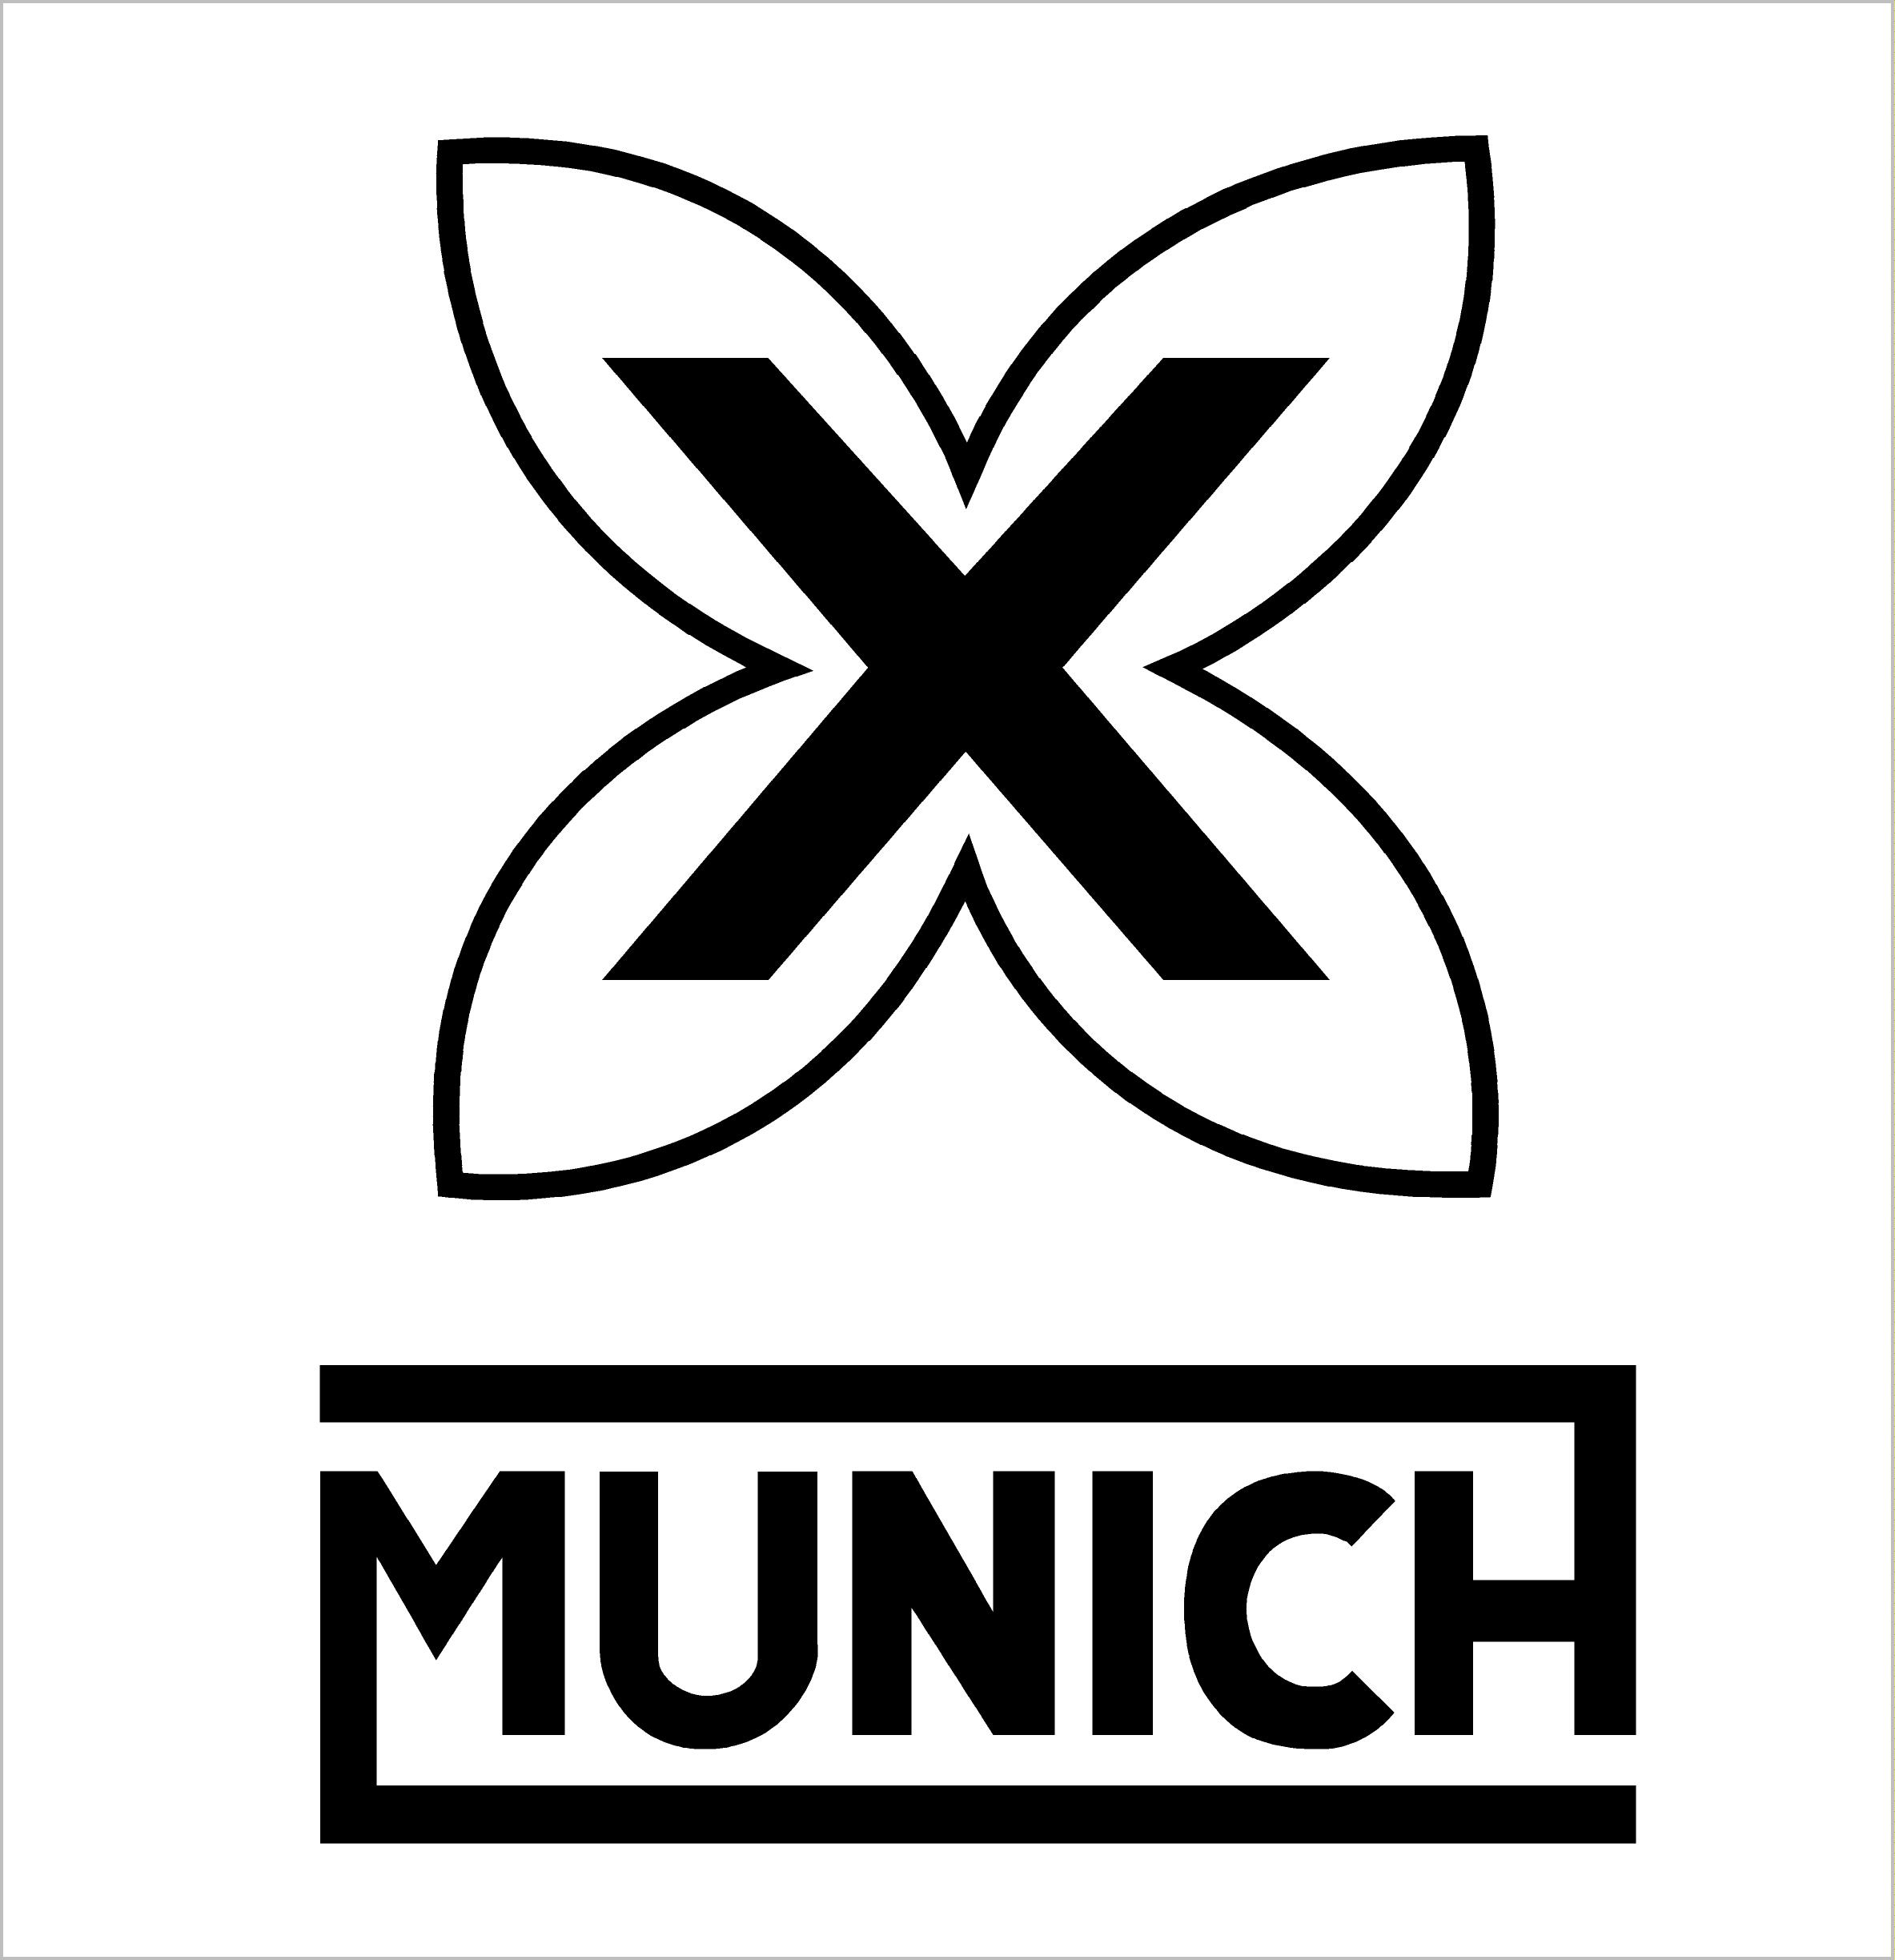 Munich (sport shoes) httpsbartstreamfileswordpresscom201304log